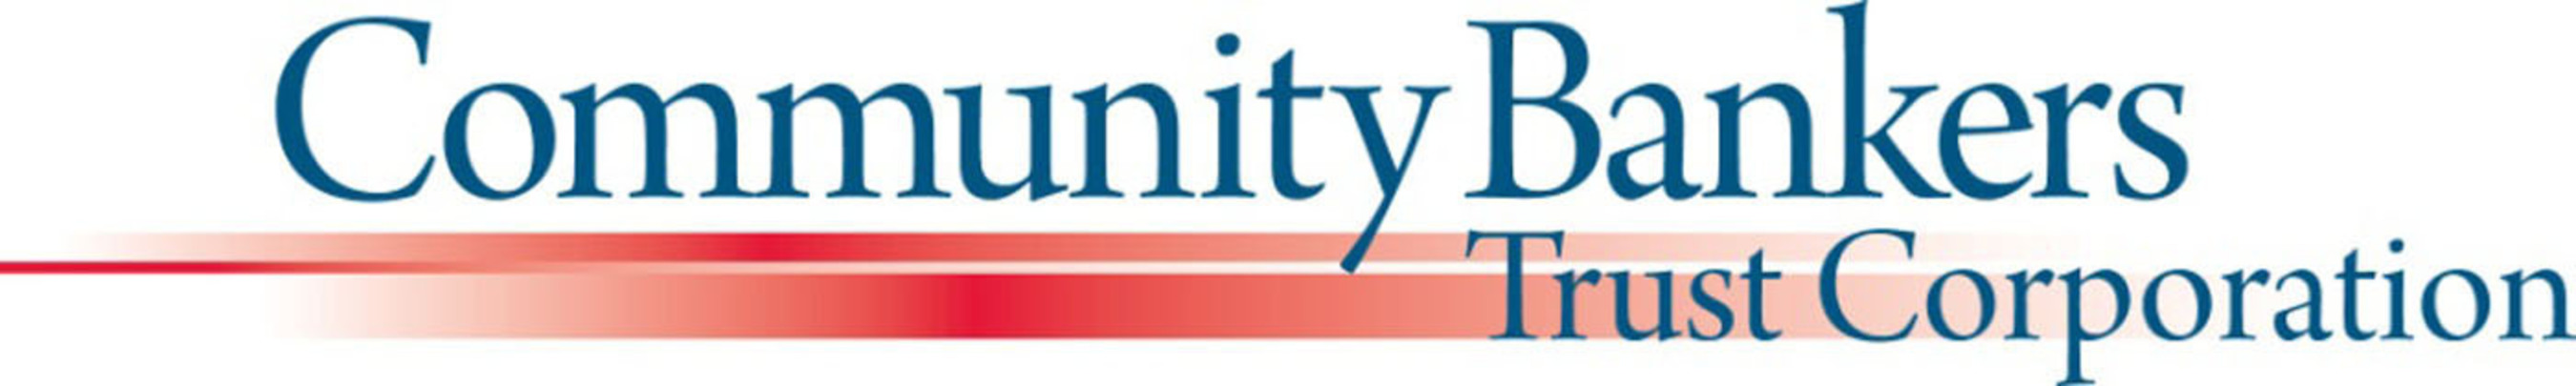 Community Bankers Trust Corporation logo. (PRNewsFoto/Community Bankers Trust Corporation) (PRNewsFoto/COMMUNITY BANKERS TRUST CORP.)